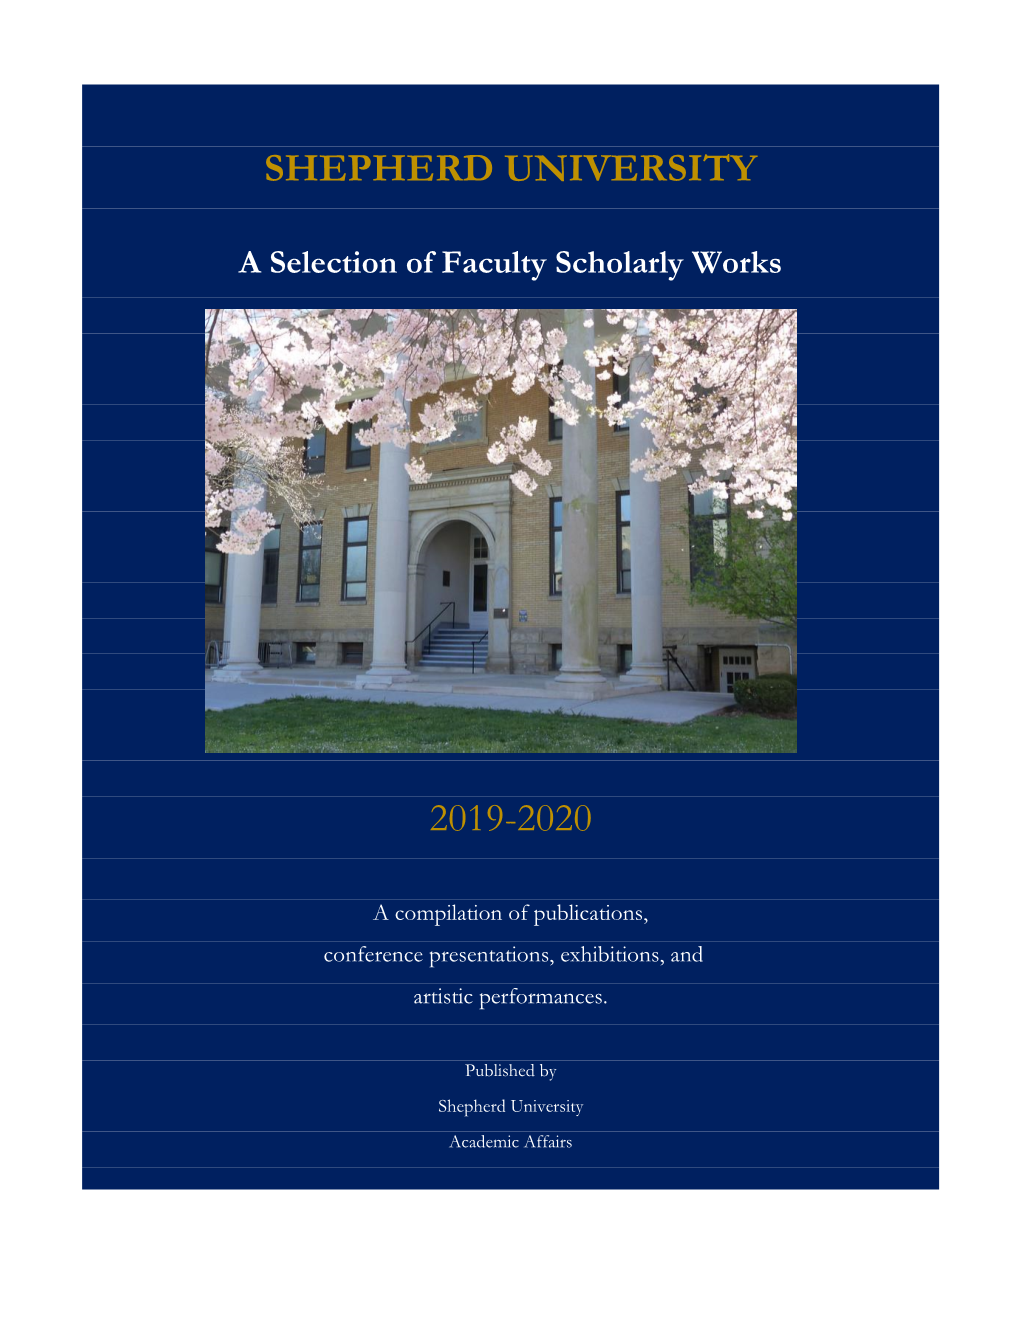 Shepherd University 2019-2020